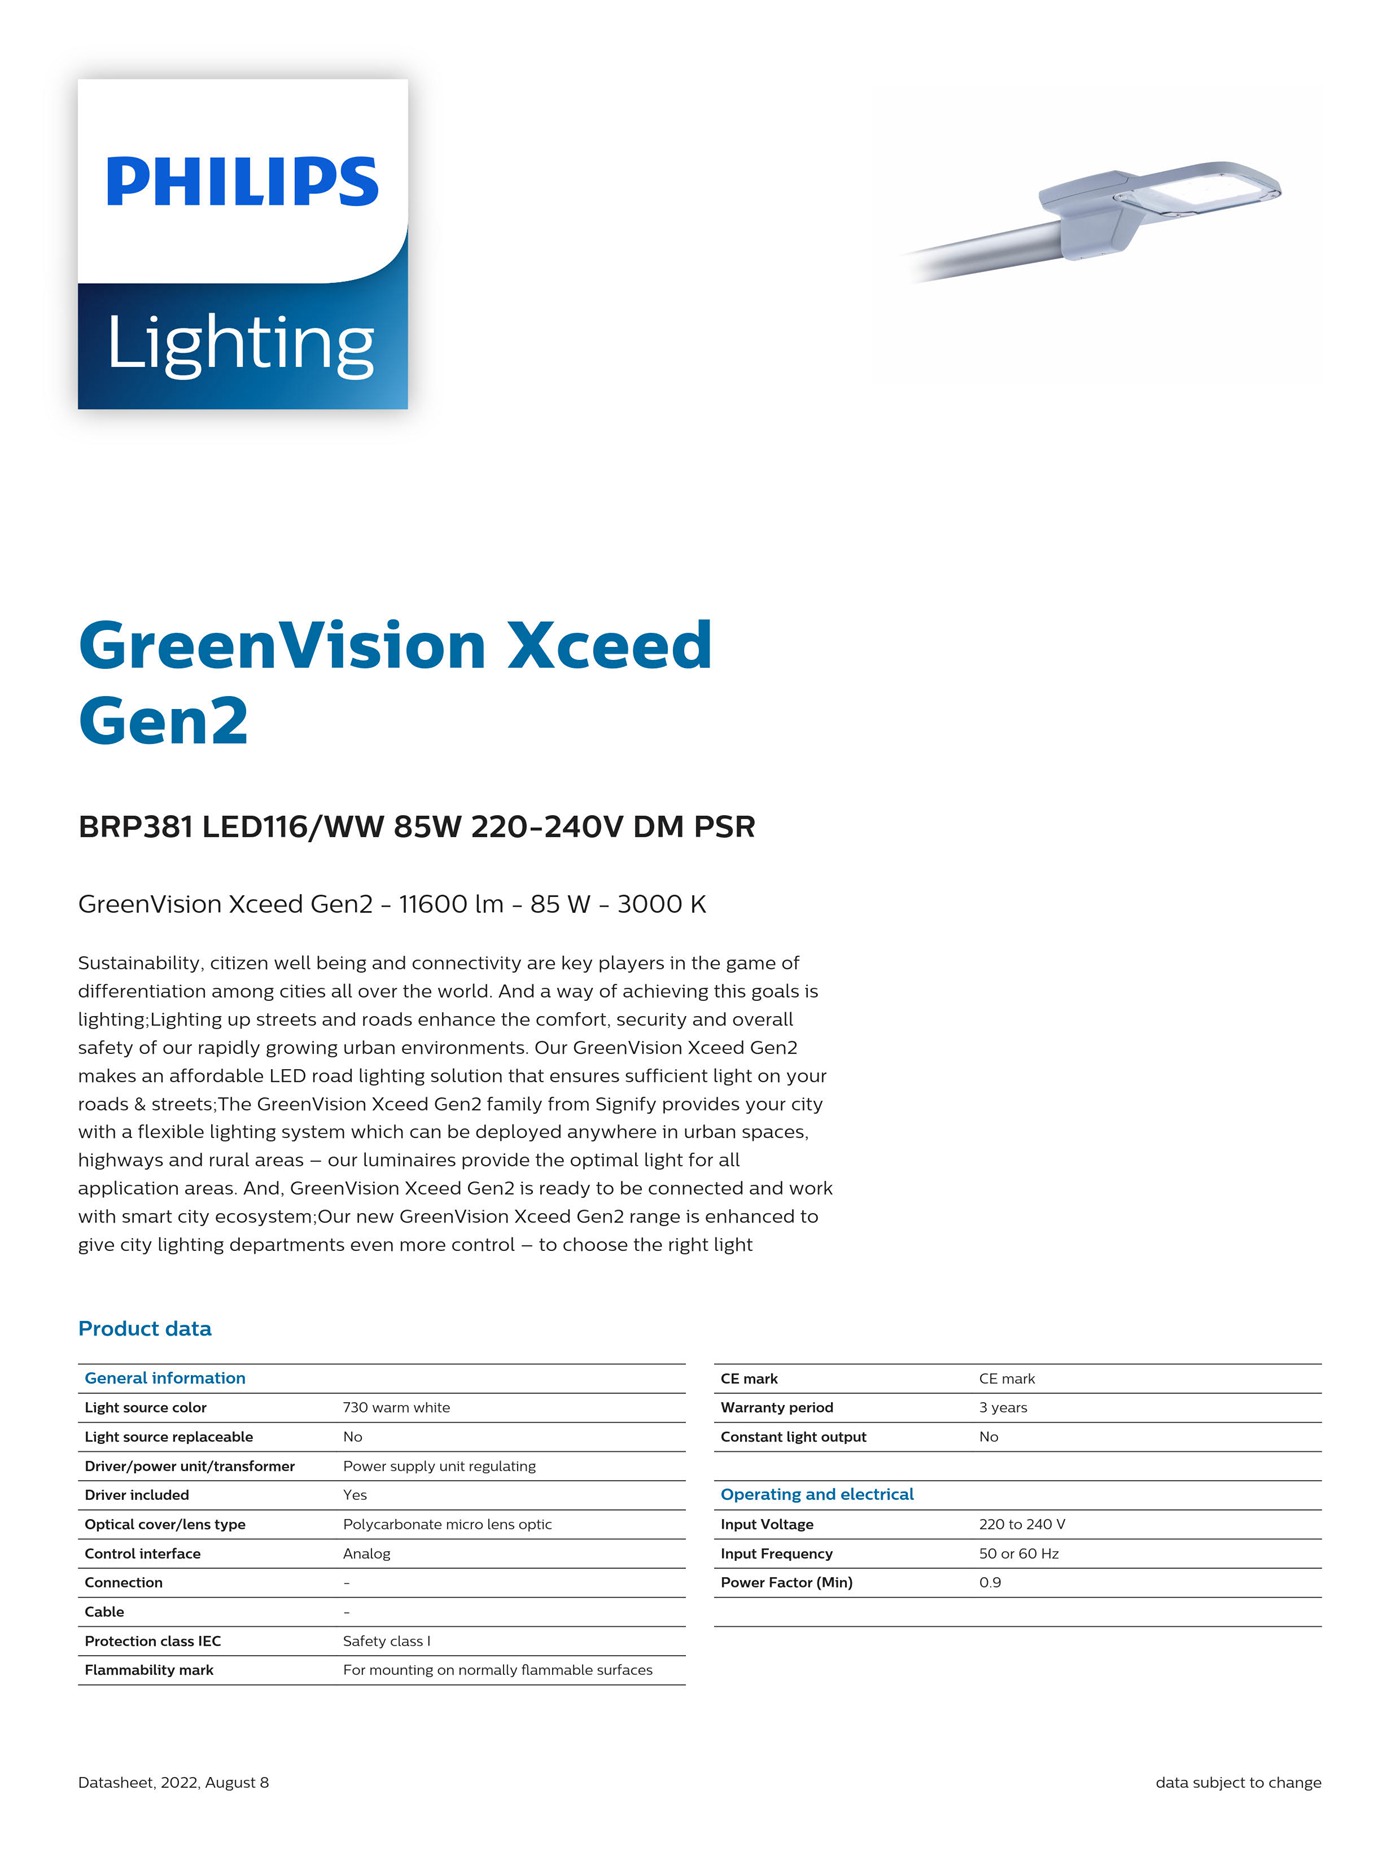 PHILIPS GreenVision Xceed Gen2 BRP381 LED116/WW 85W 220-240V DM PSR 911401877898